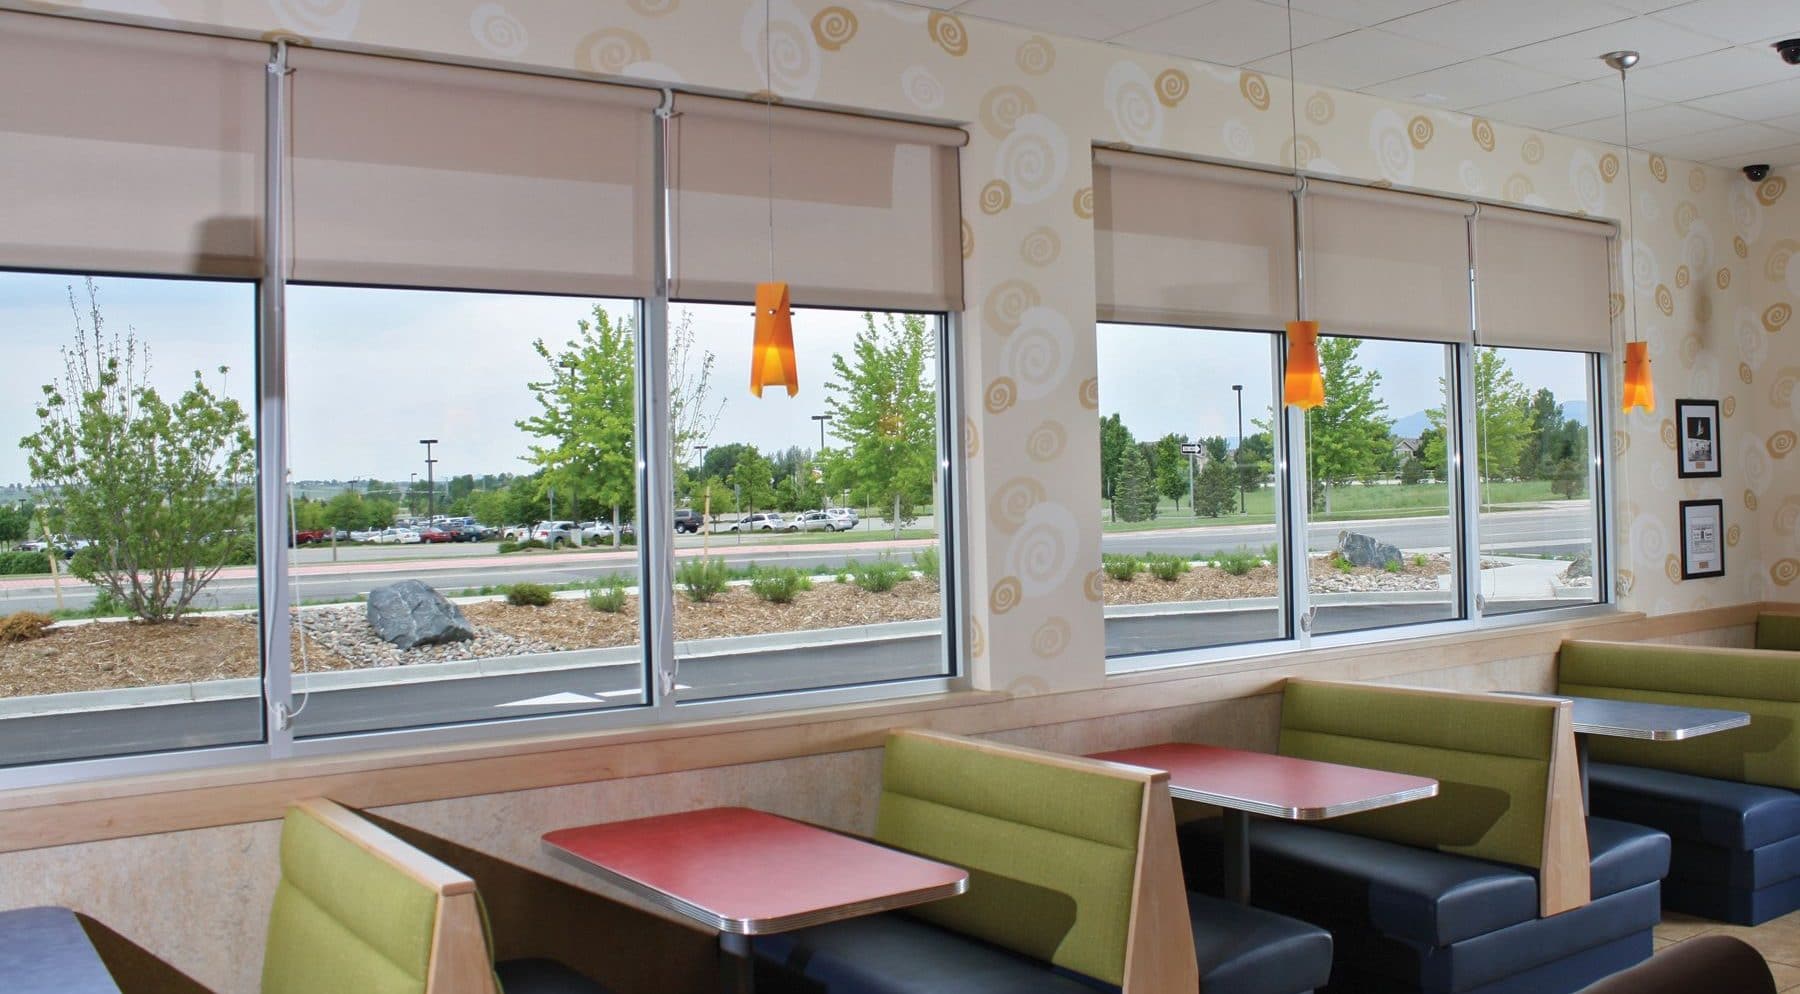 Window Blinds Ideas for Restaurants in Florida